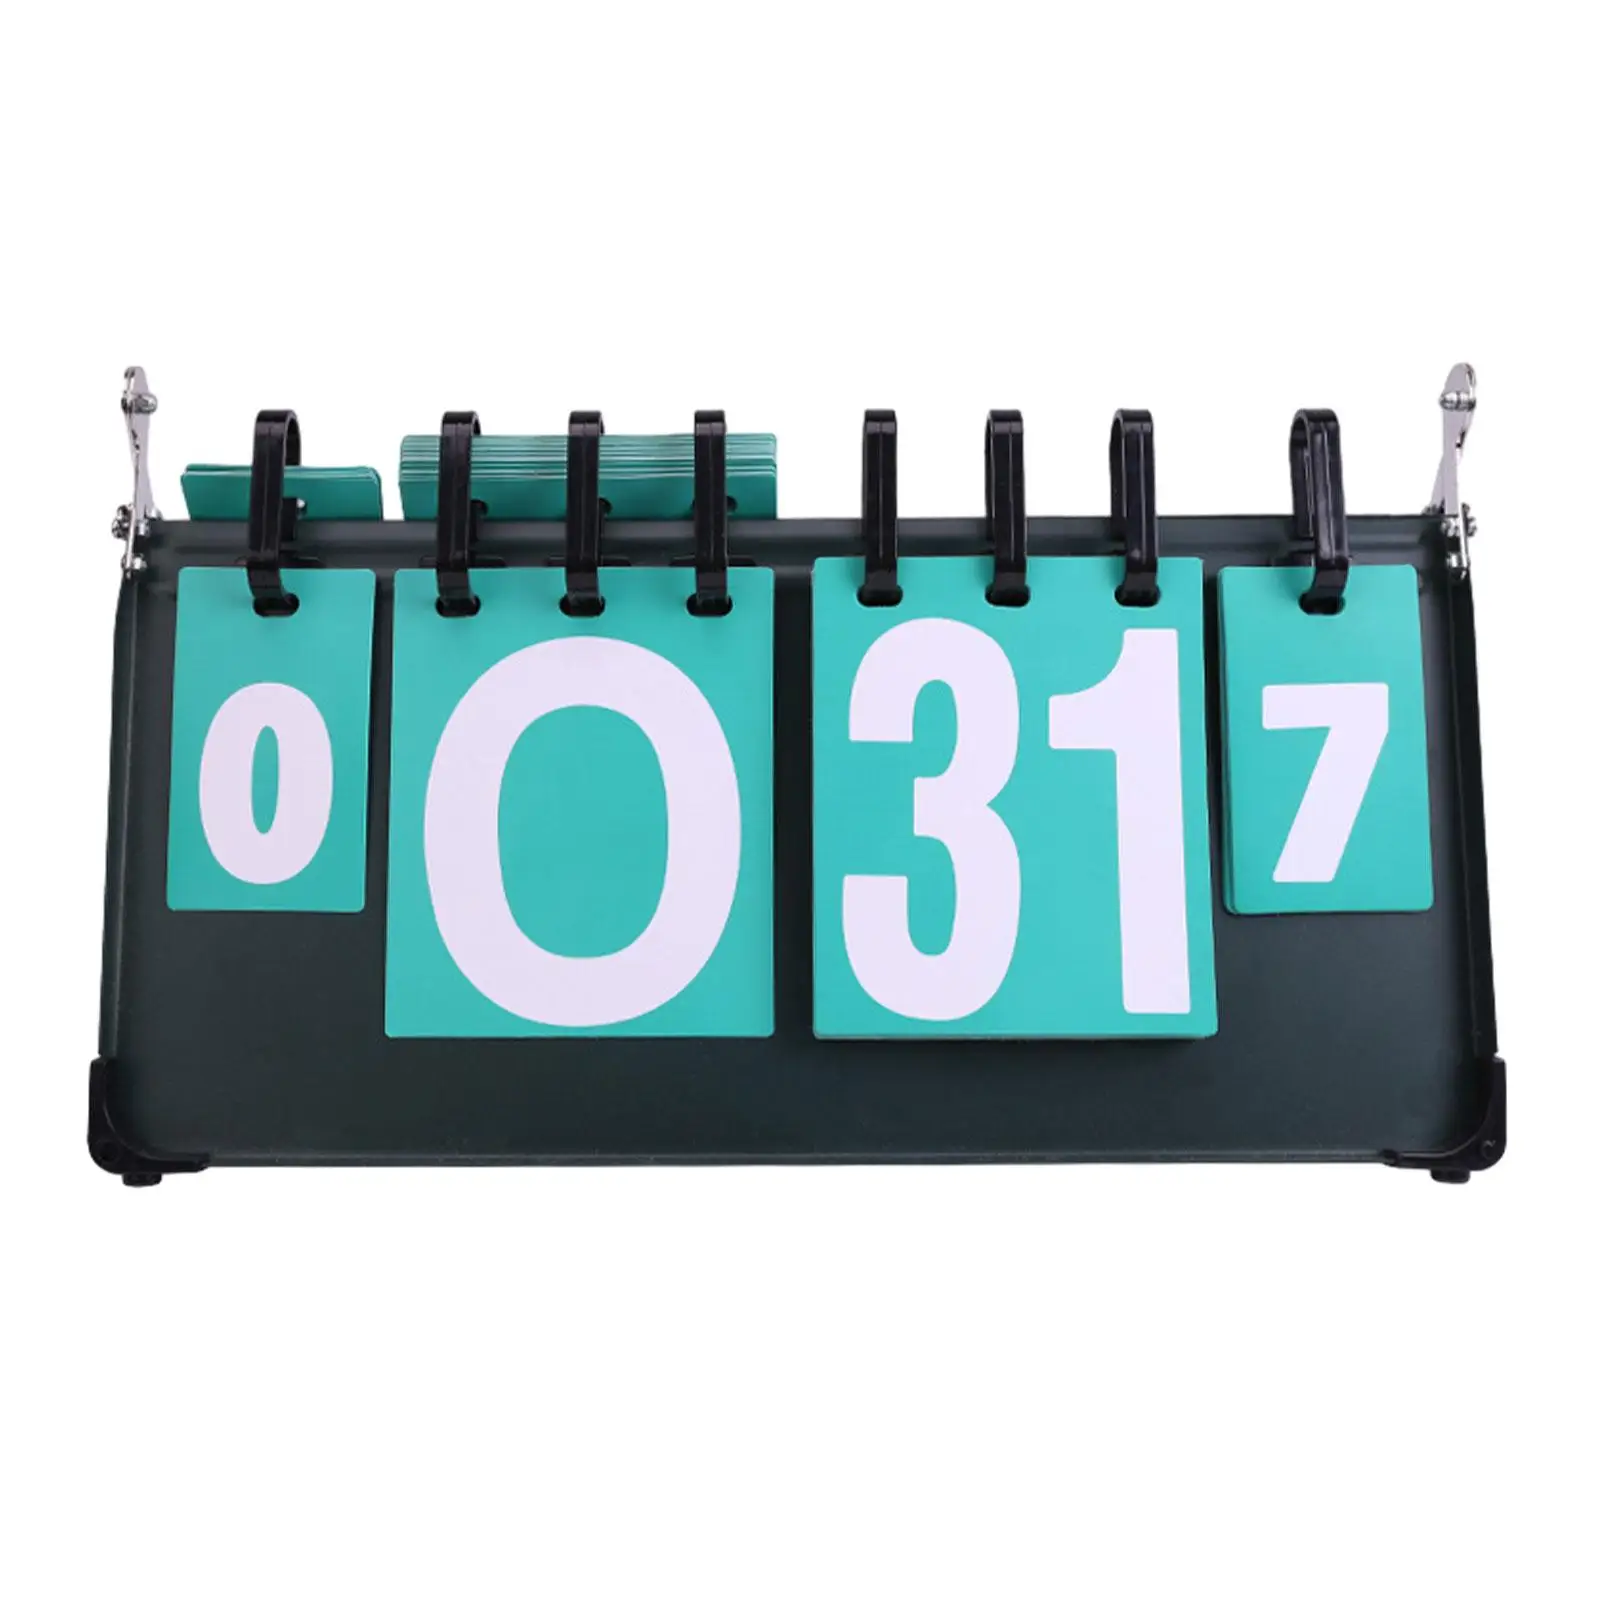 Flip Score Board Foldable Portable Score Counter Tabletop Scoreboard for Football Baseball Basketball Billiards Tennis Ball